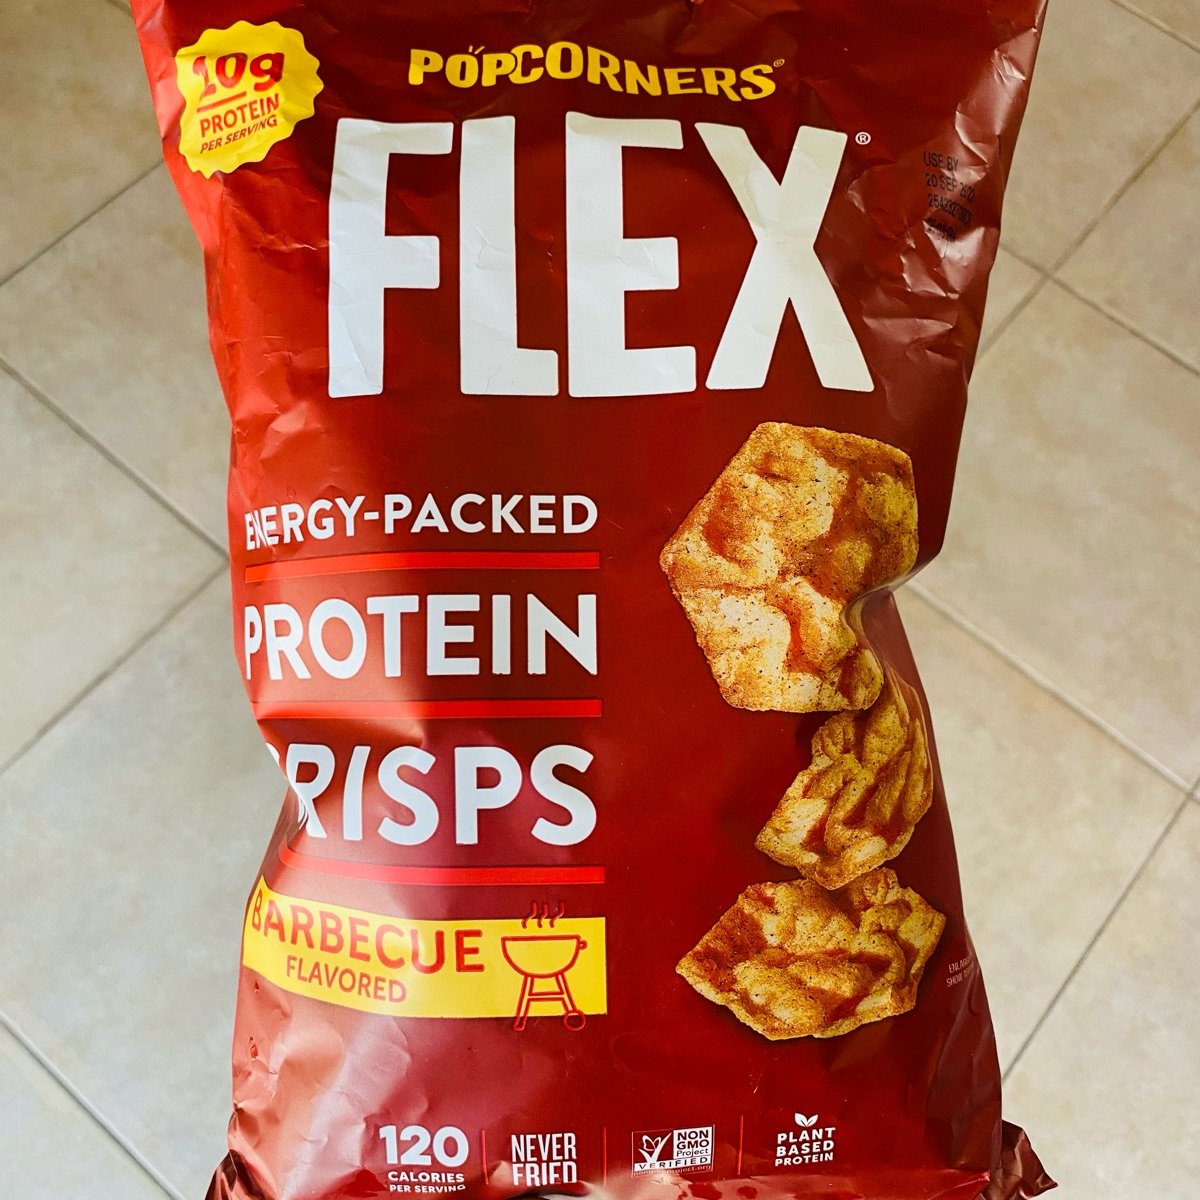 PopCorners popcorners flex protein crisps BBQ flavour Review | abillion